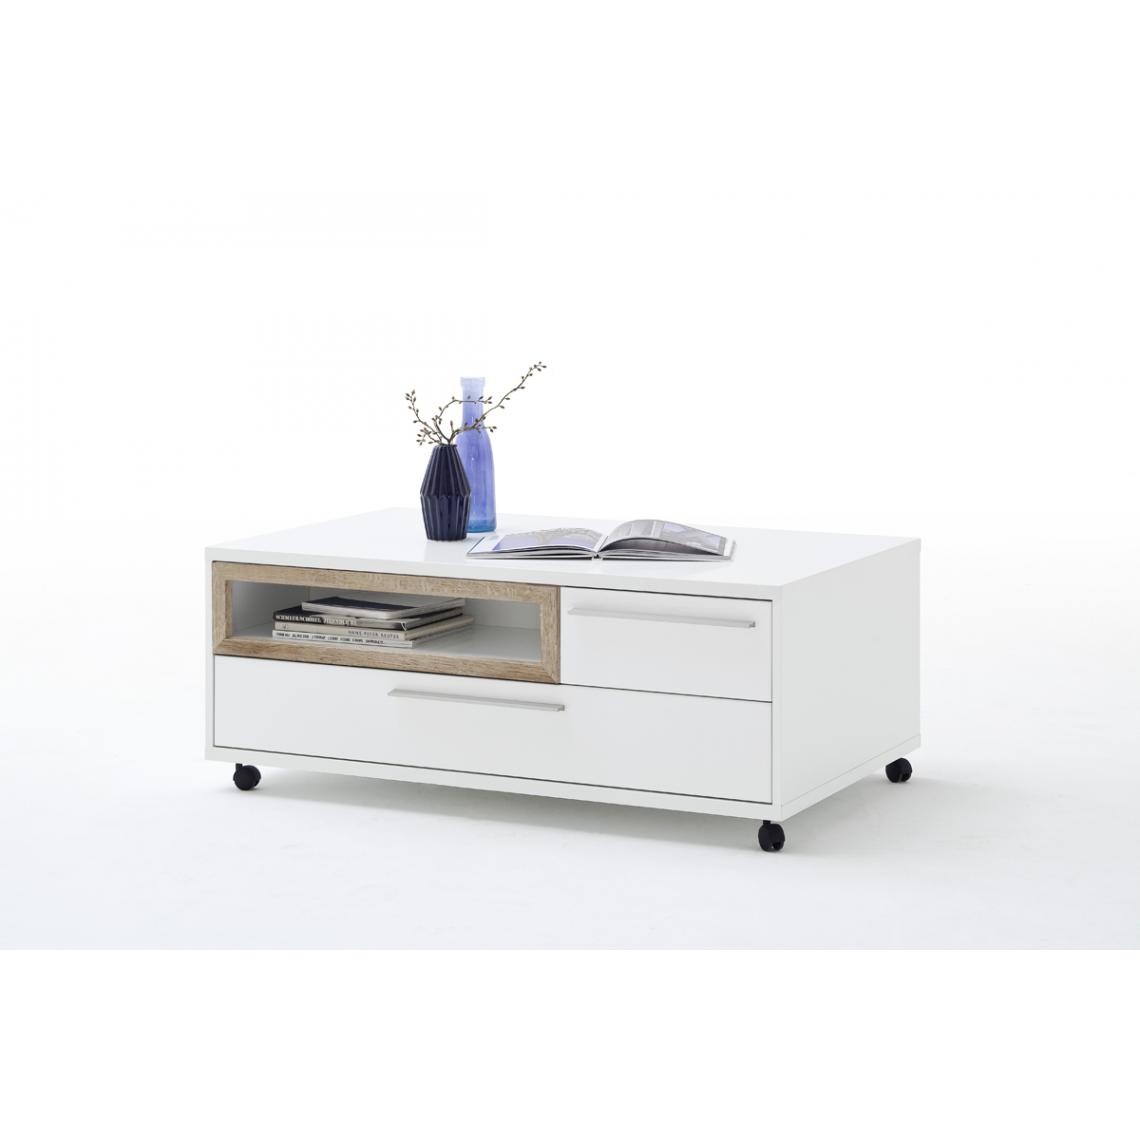 Pegane - Table basse blanc brillant et imitation chêne - L115 x H48 x P70 cm - Tables basses